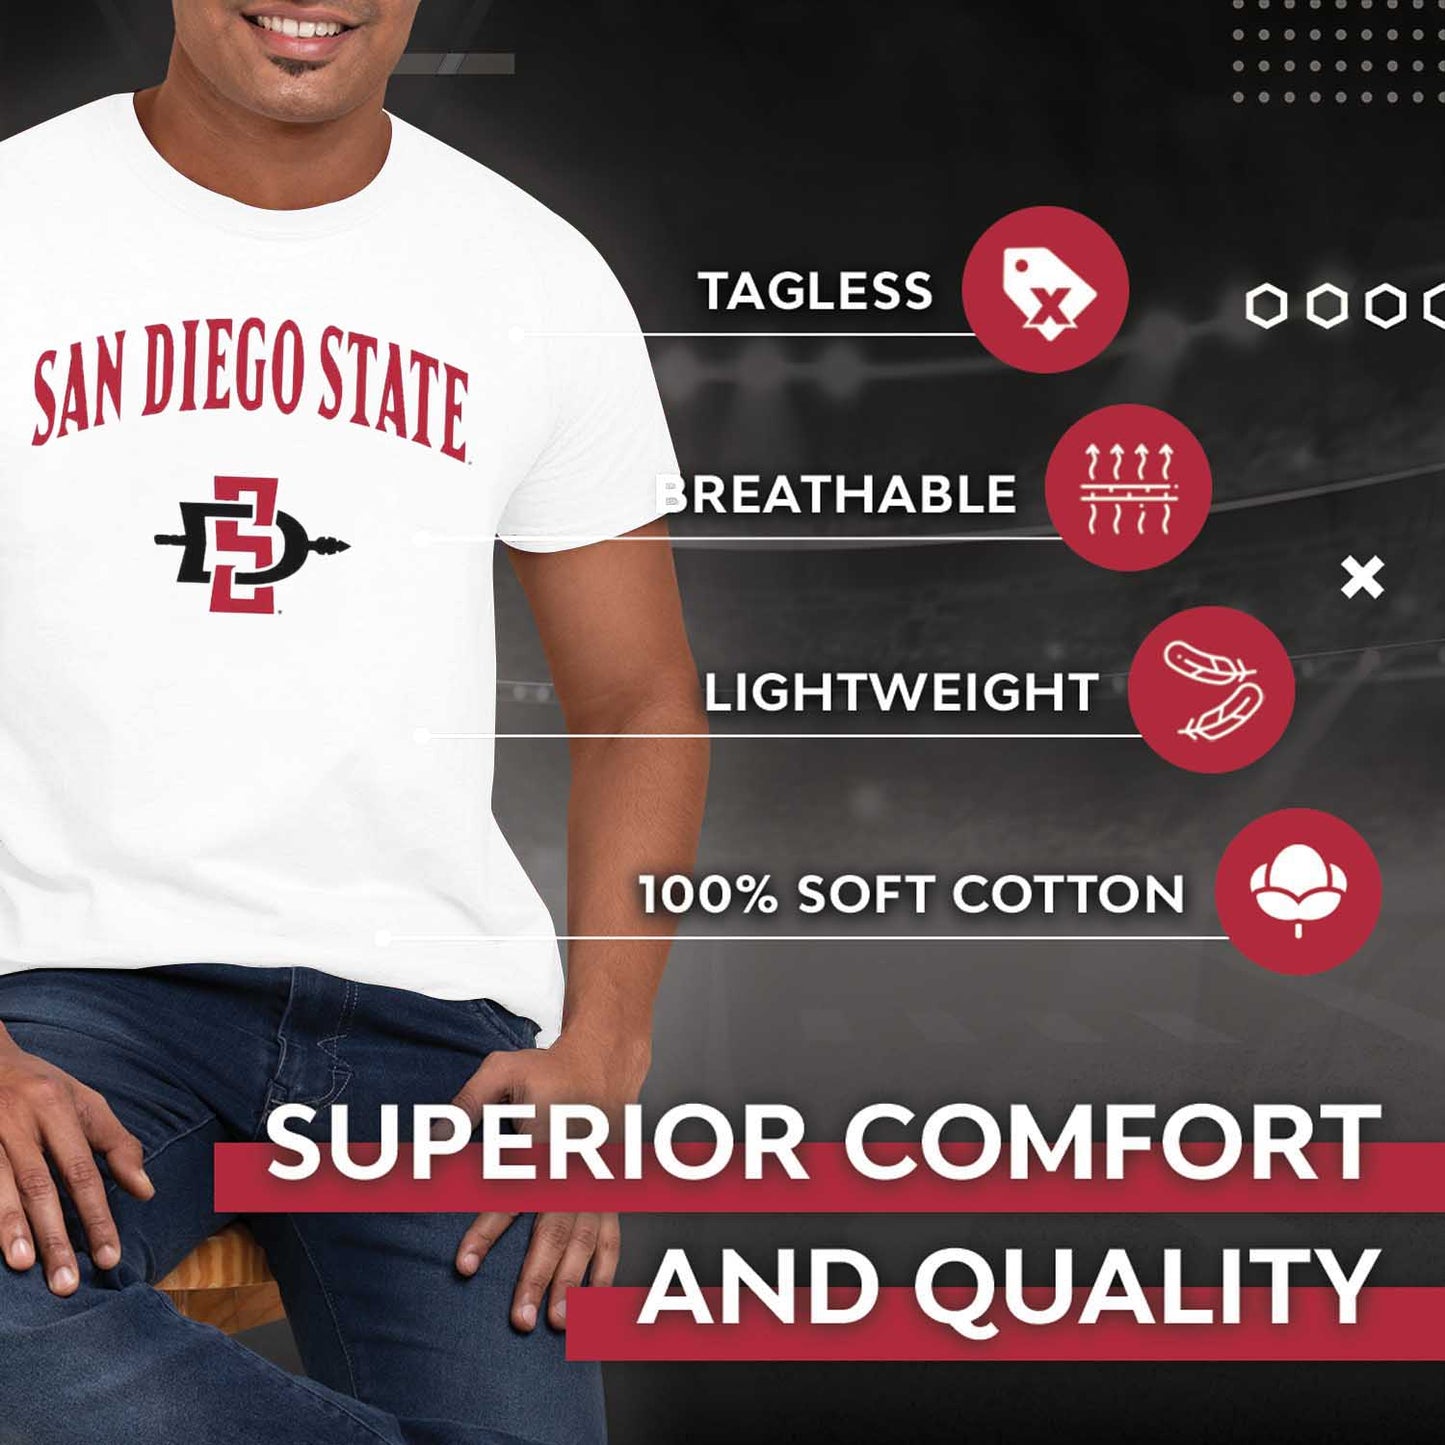 San Diego State Aztecs NCAA Adult Gameday Cotton T-Shirt - White